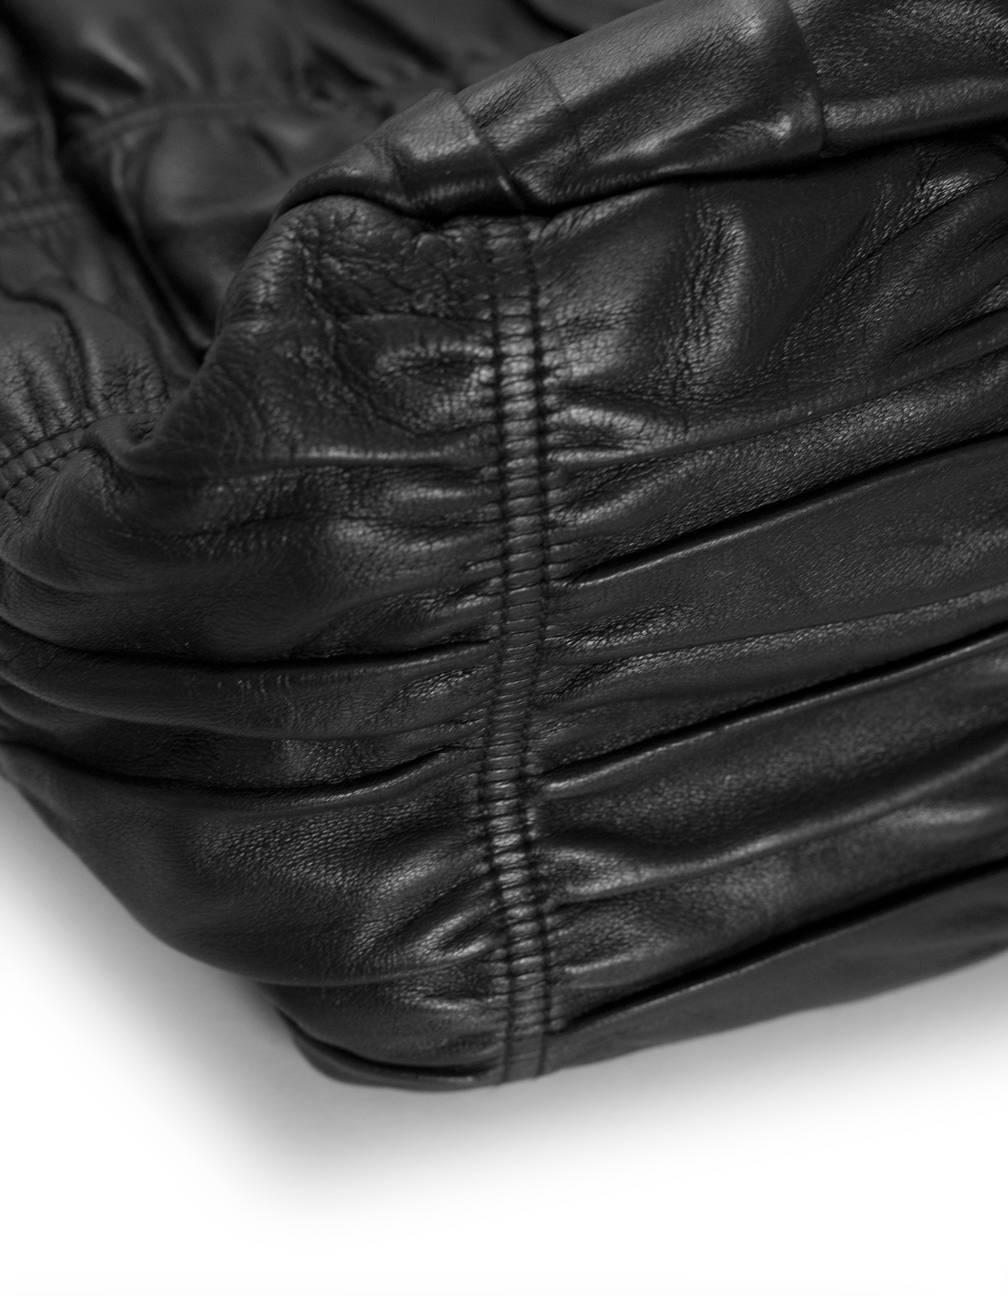 Women's Prada Black Nappa Gaufre Leather Sacca Hobo Bag